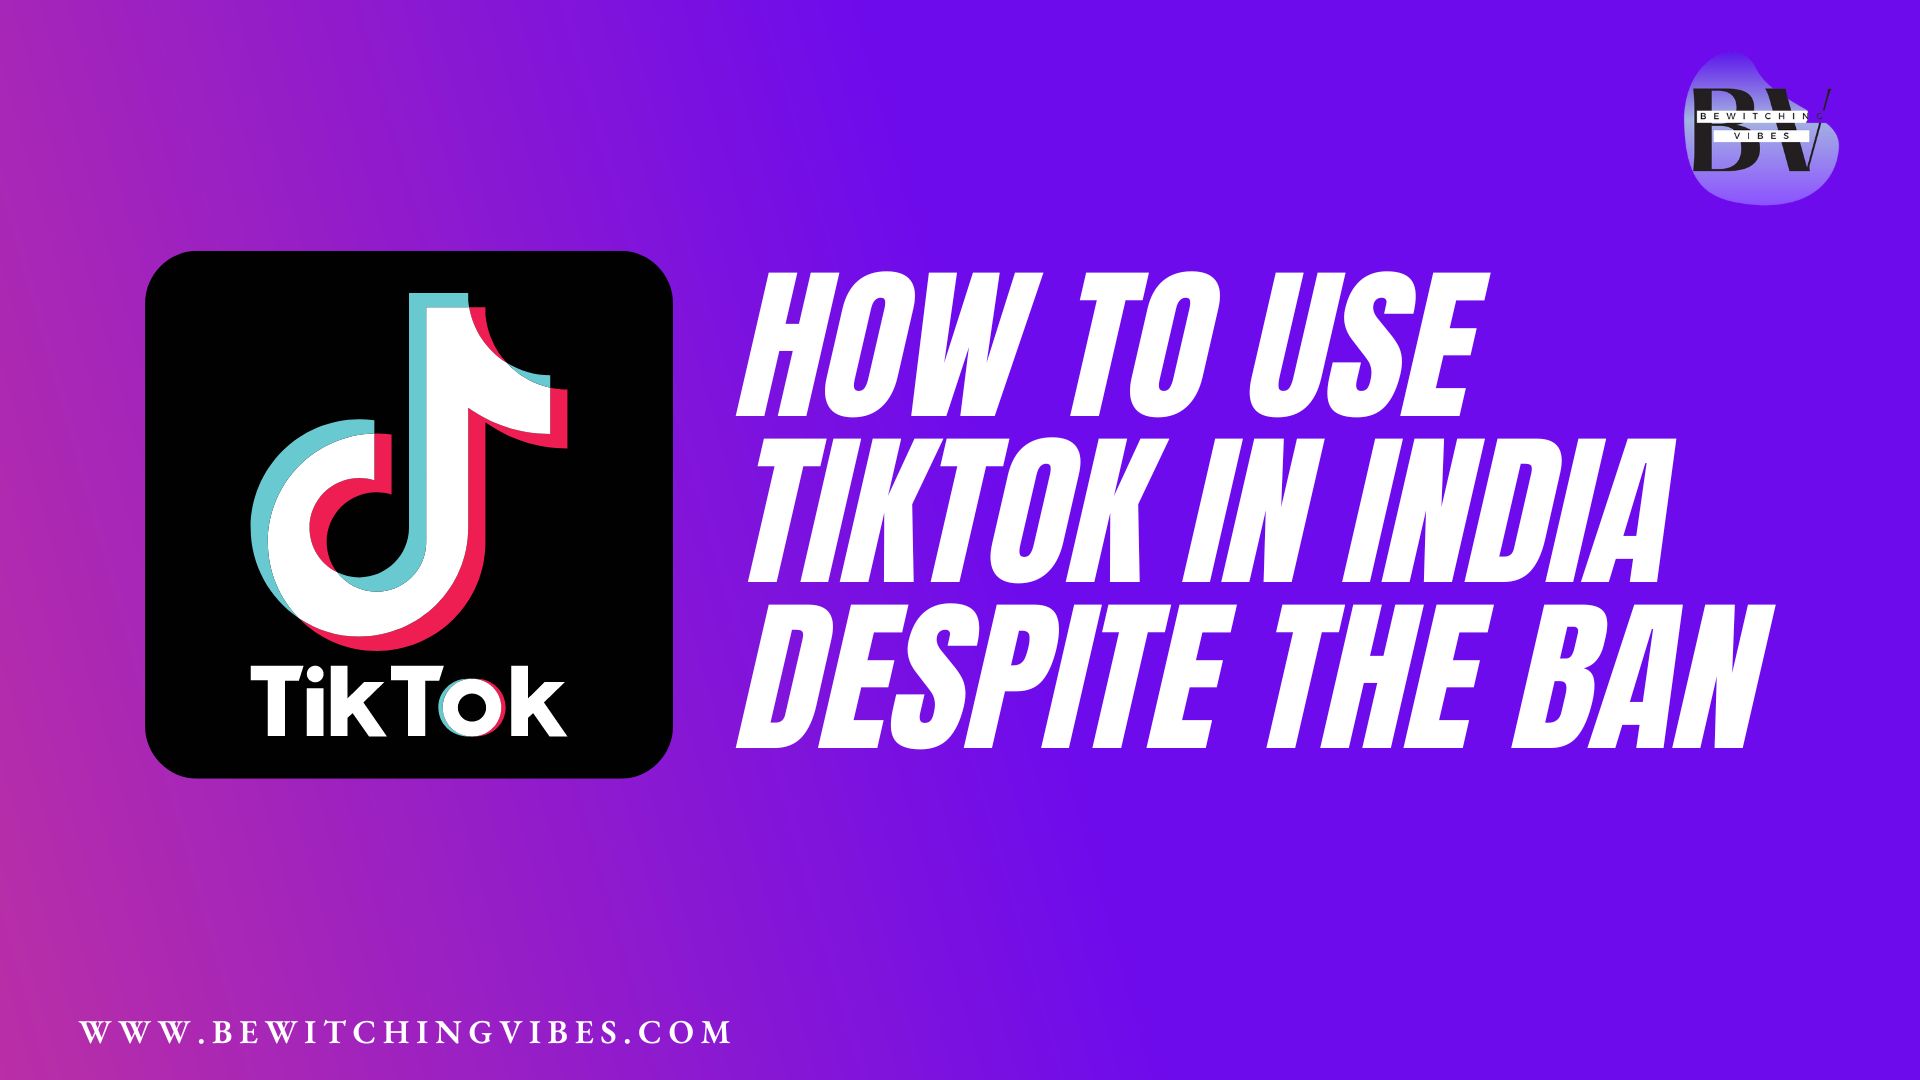 How to use tiktok in india despite the ban